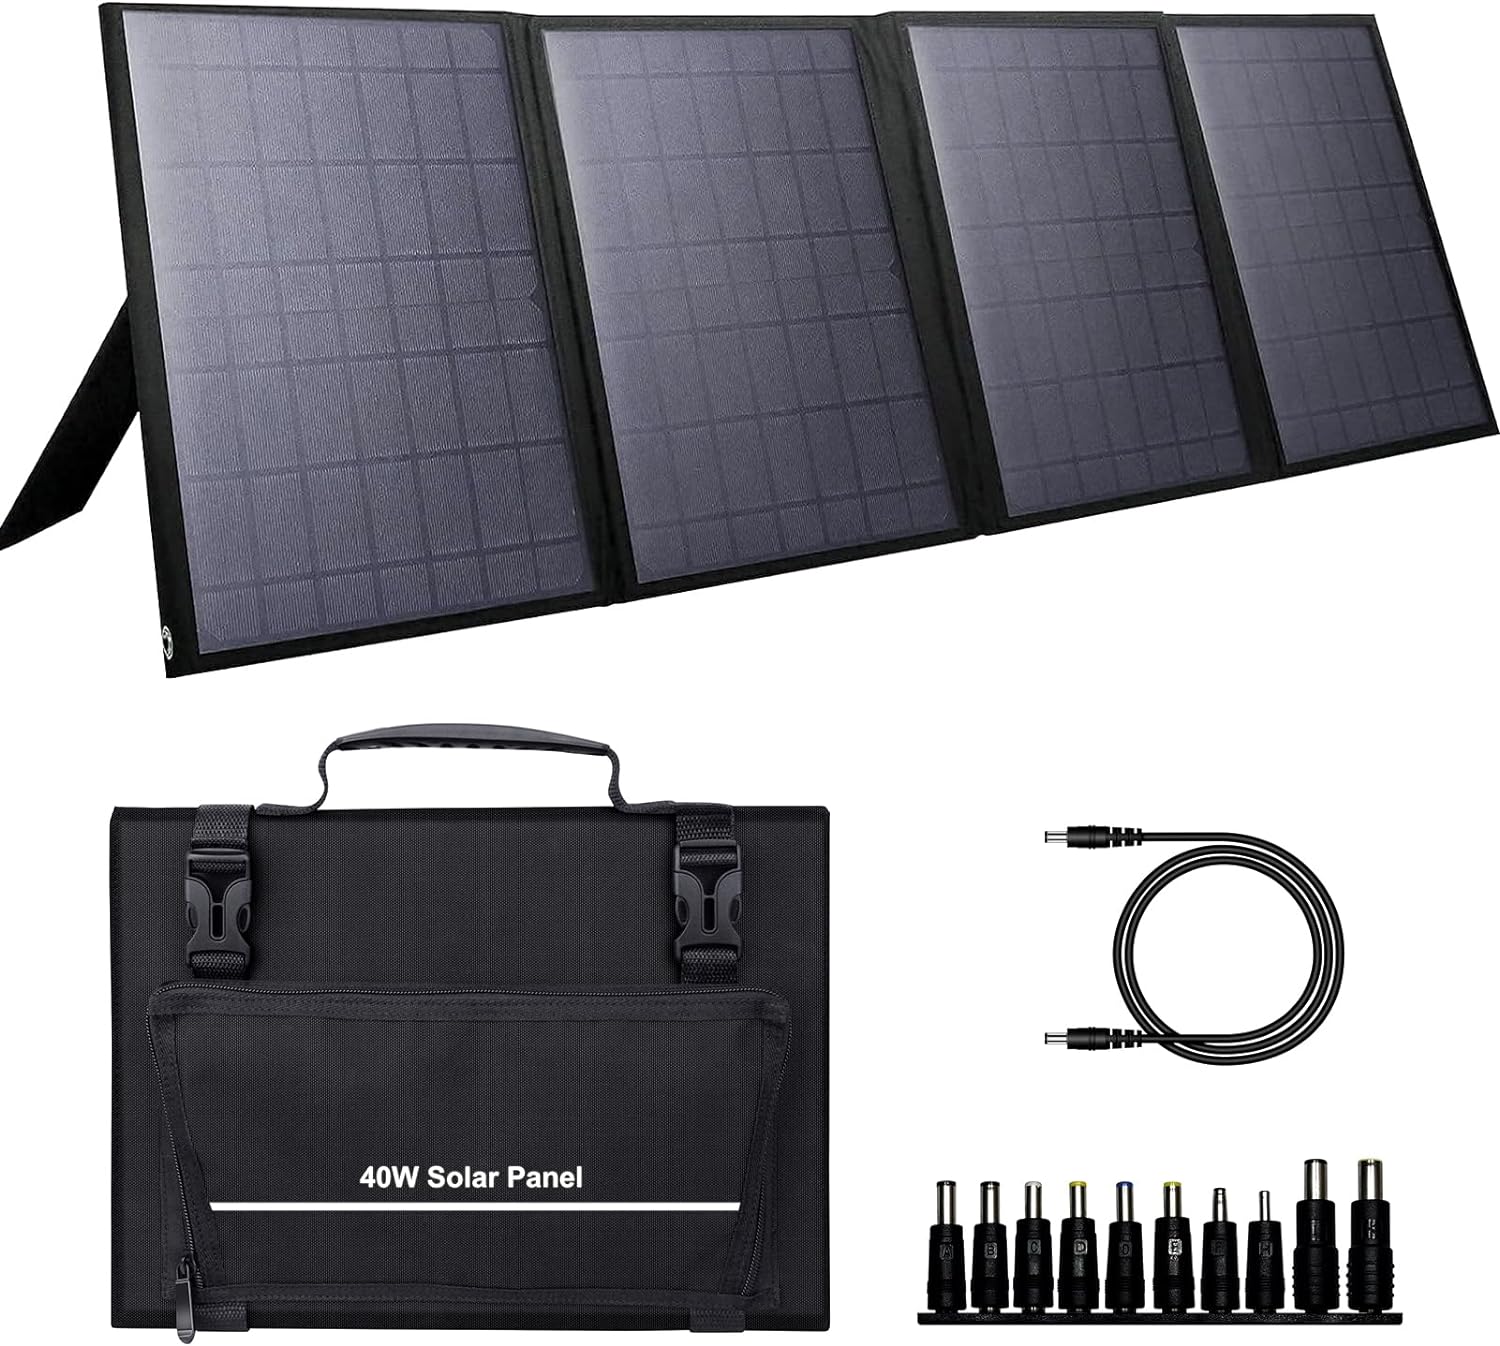 Portable Solar Panel 40W Review